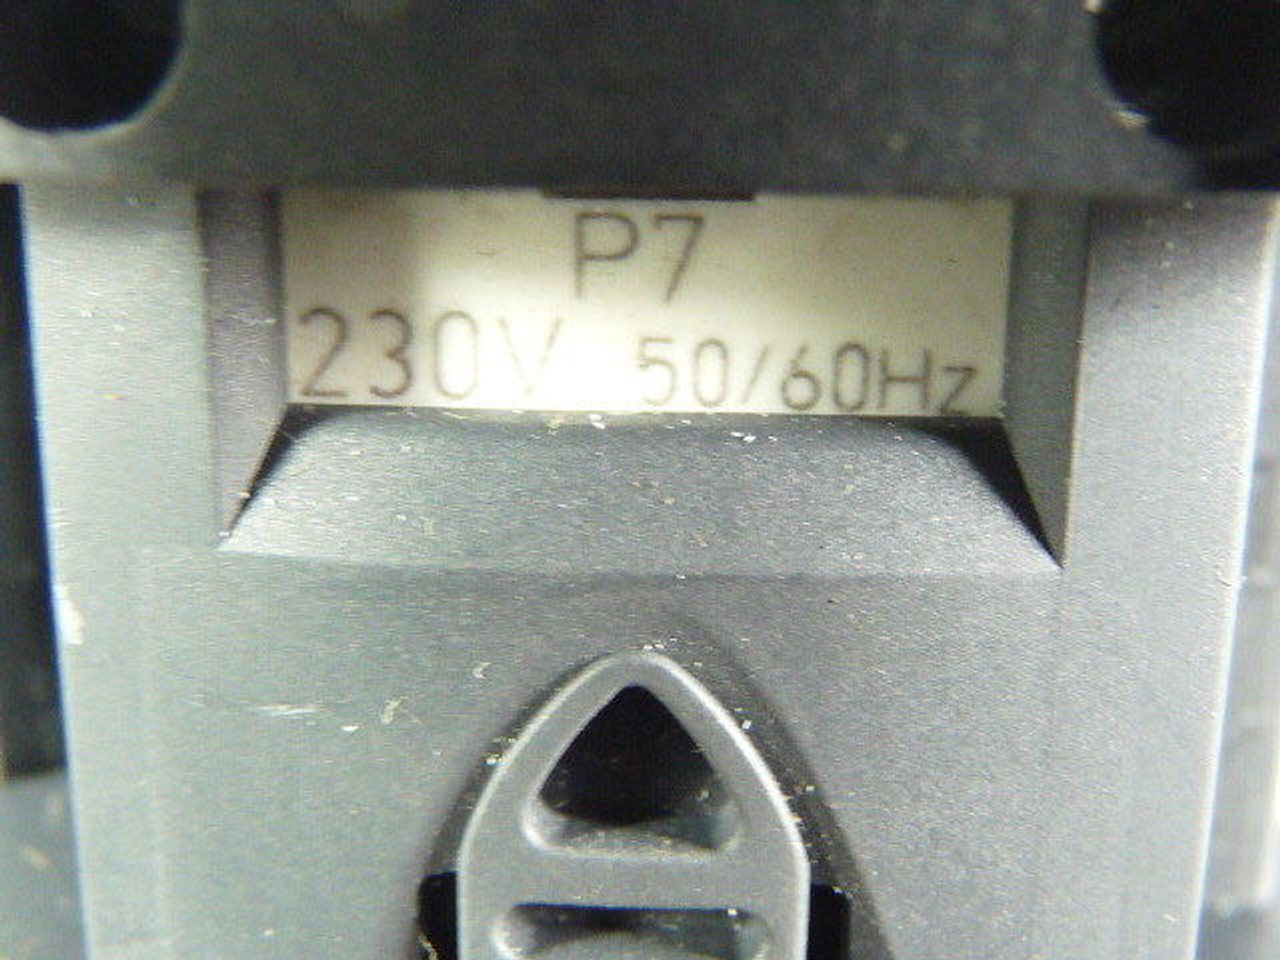 Telemecanique CAD32P7 TeSys Control Relay 10A 3NO/2NC 690V USED